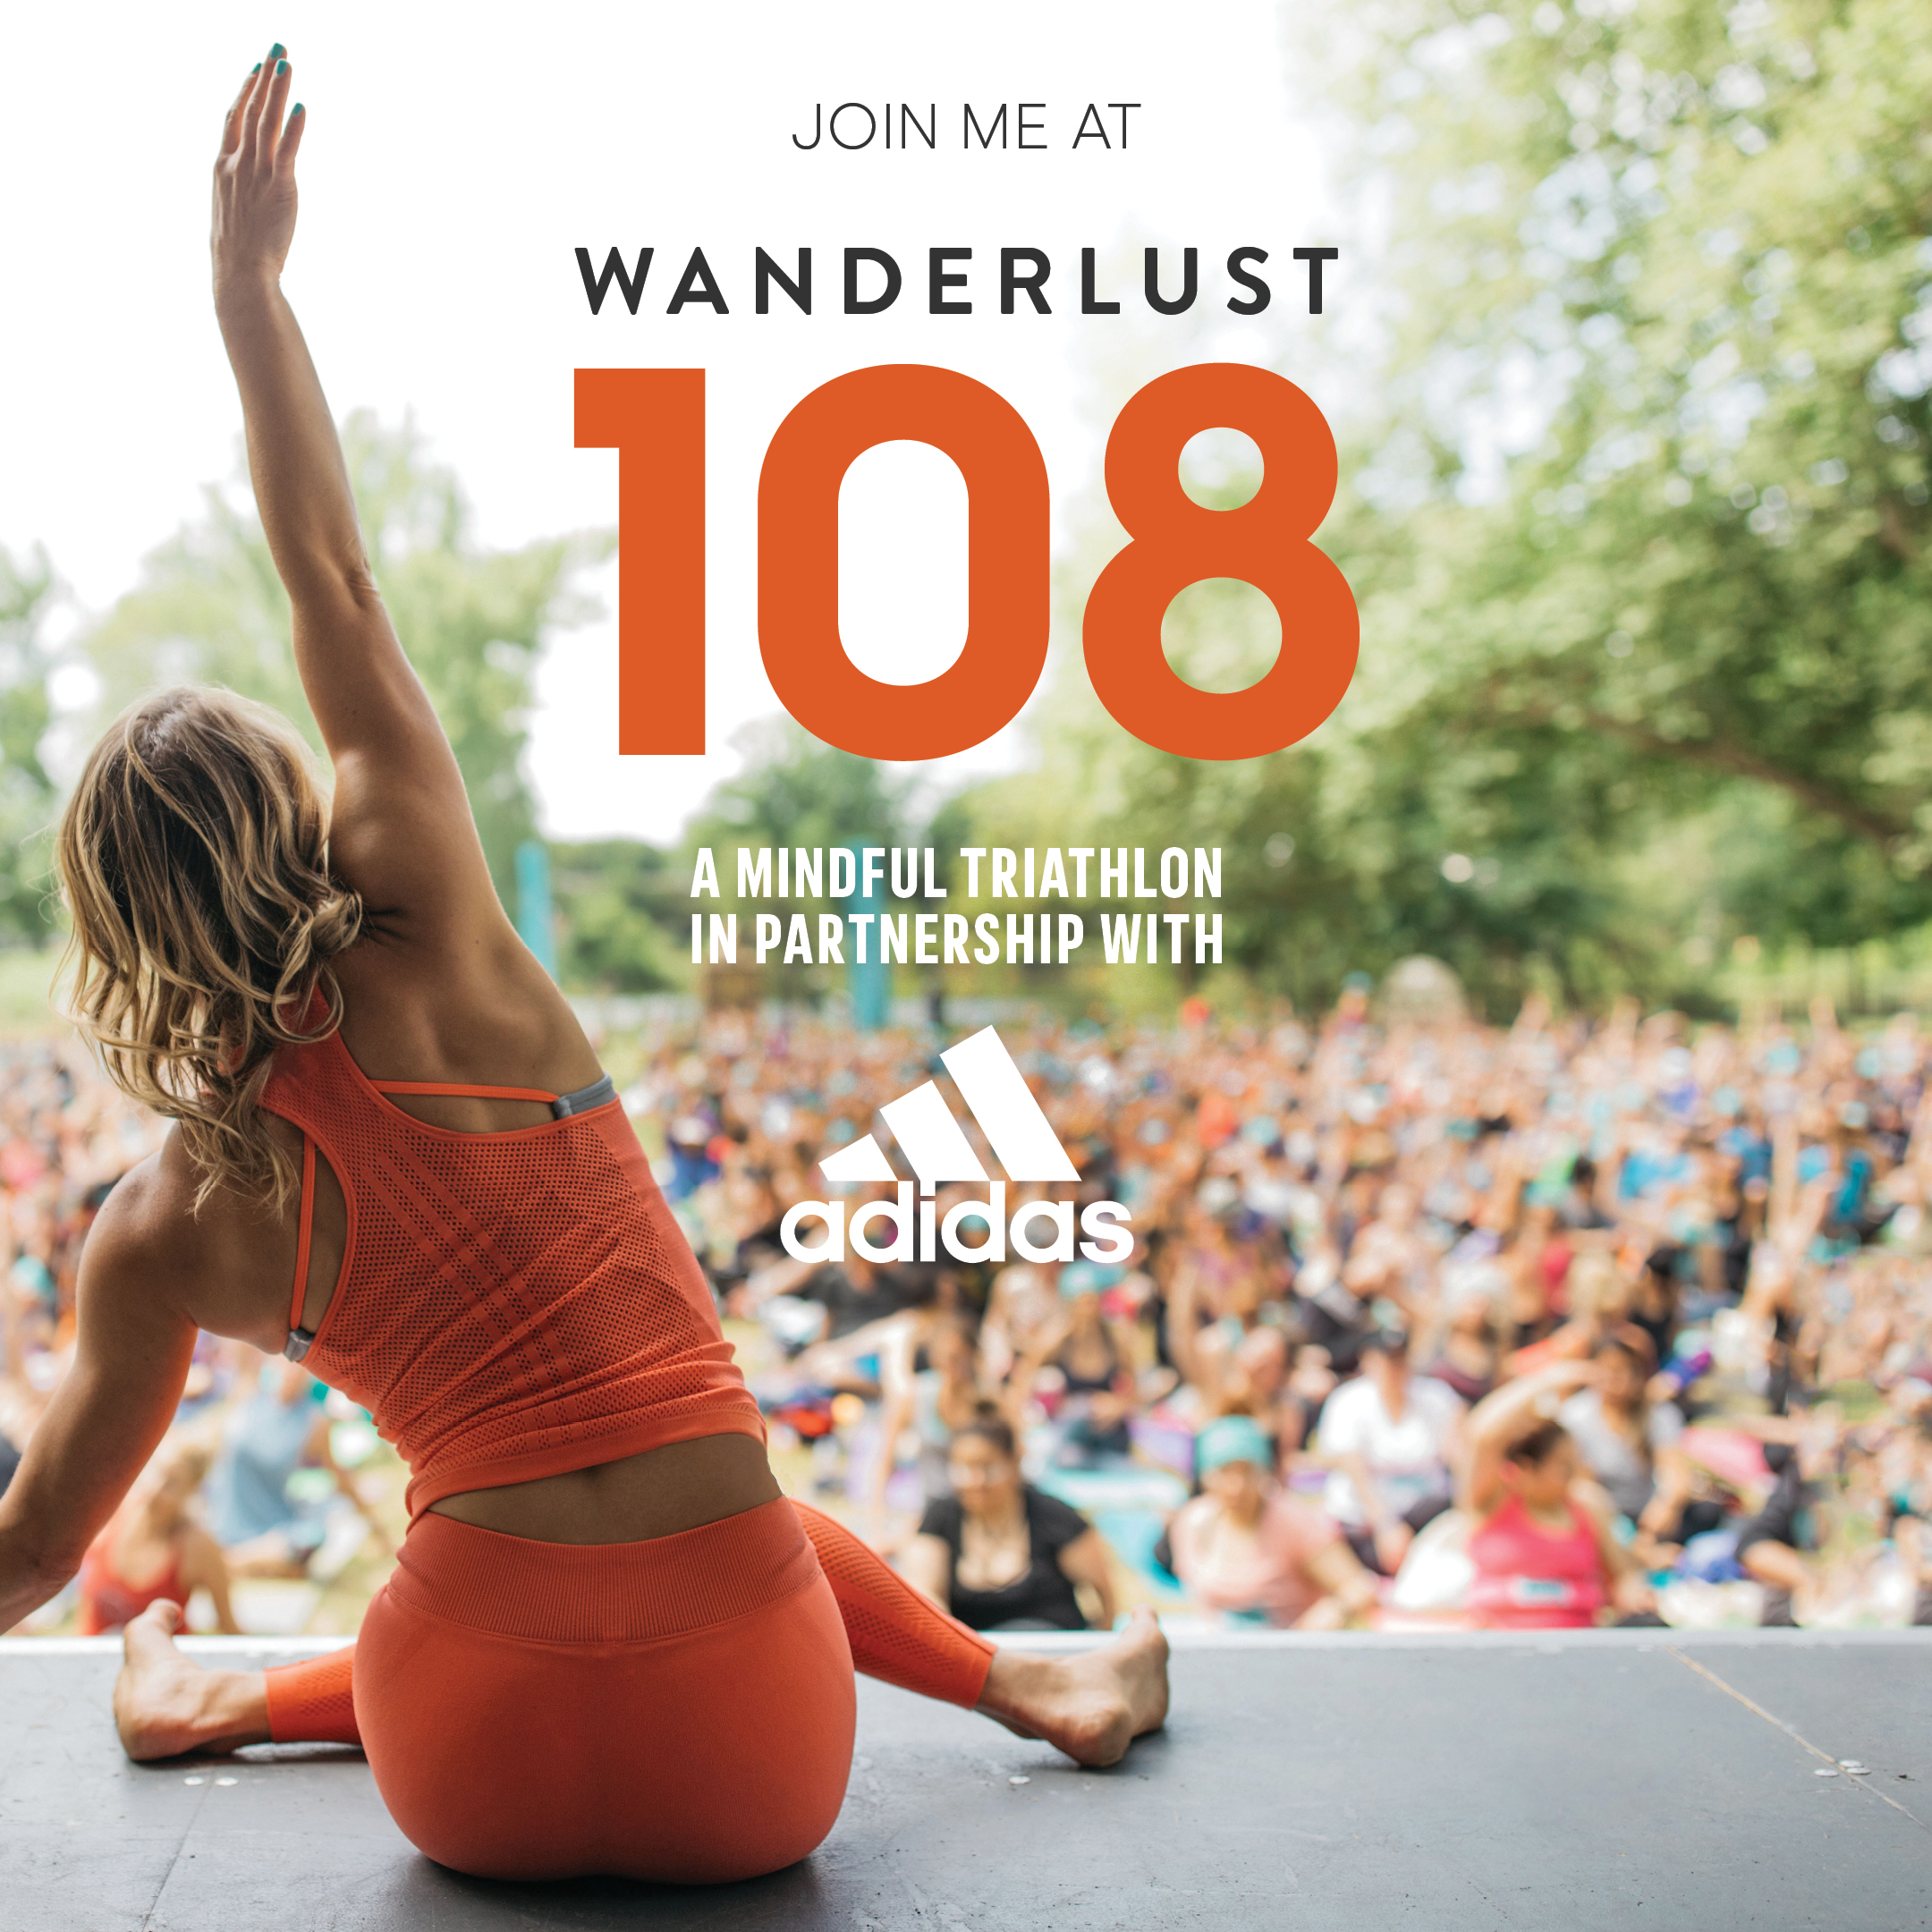 Wanderlust 108 London — Rayburn Yoga